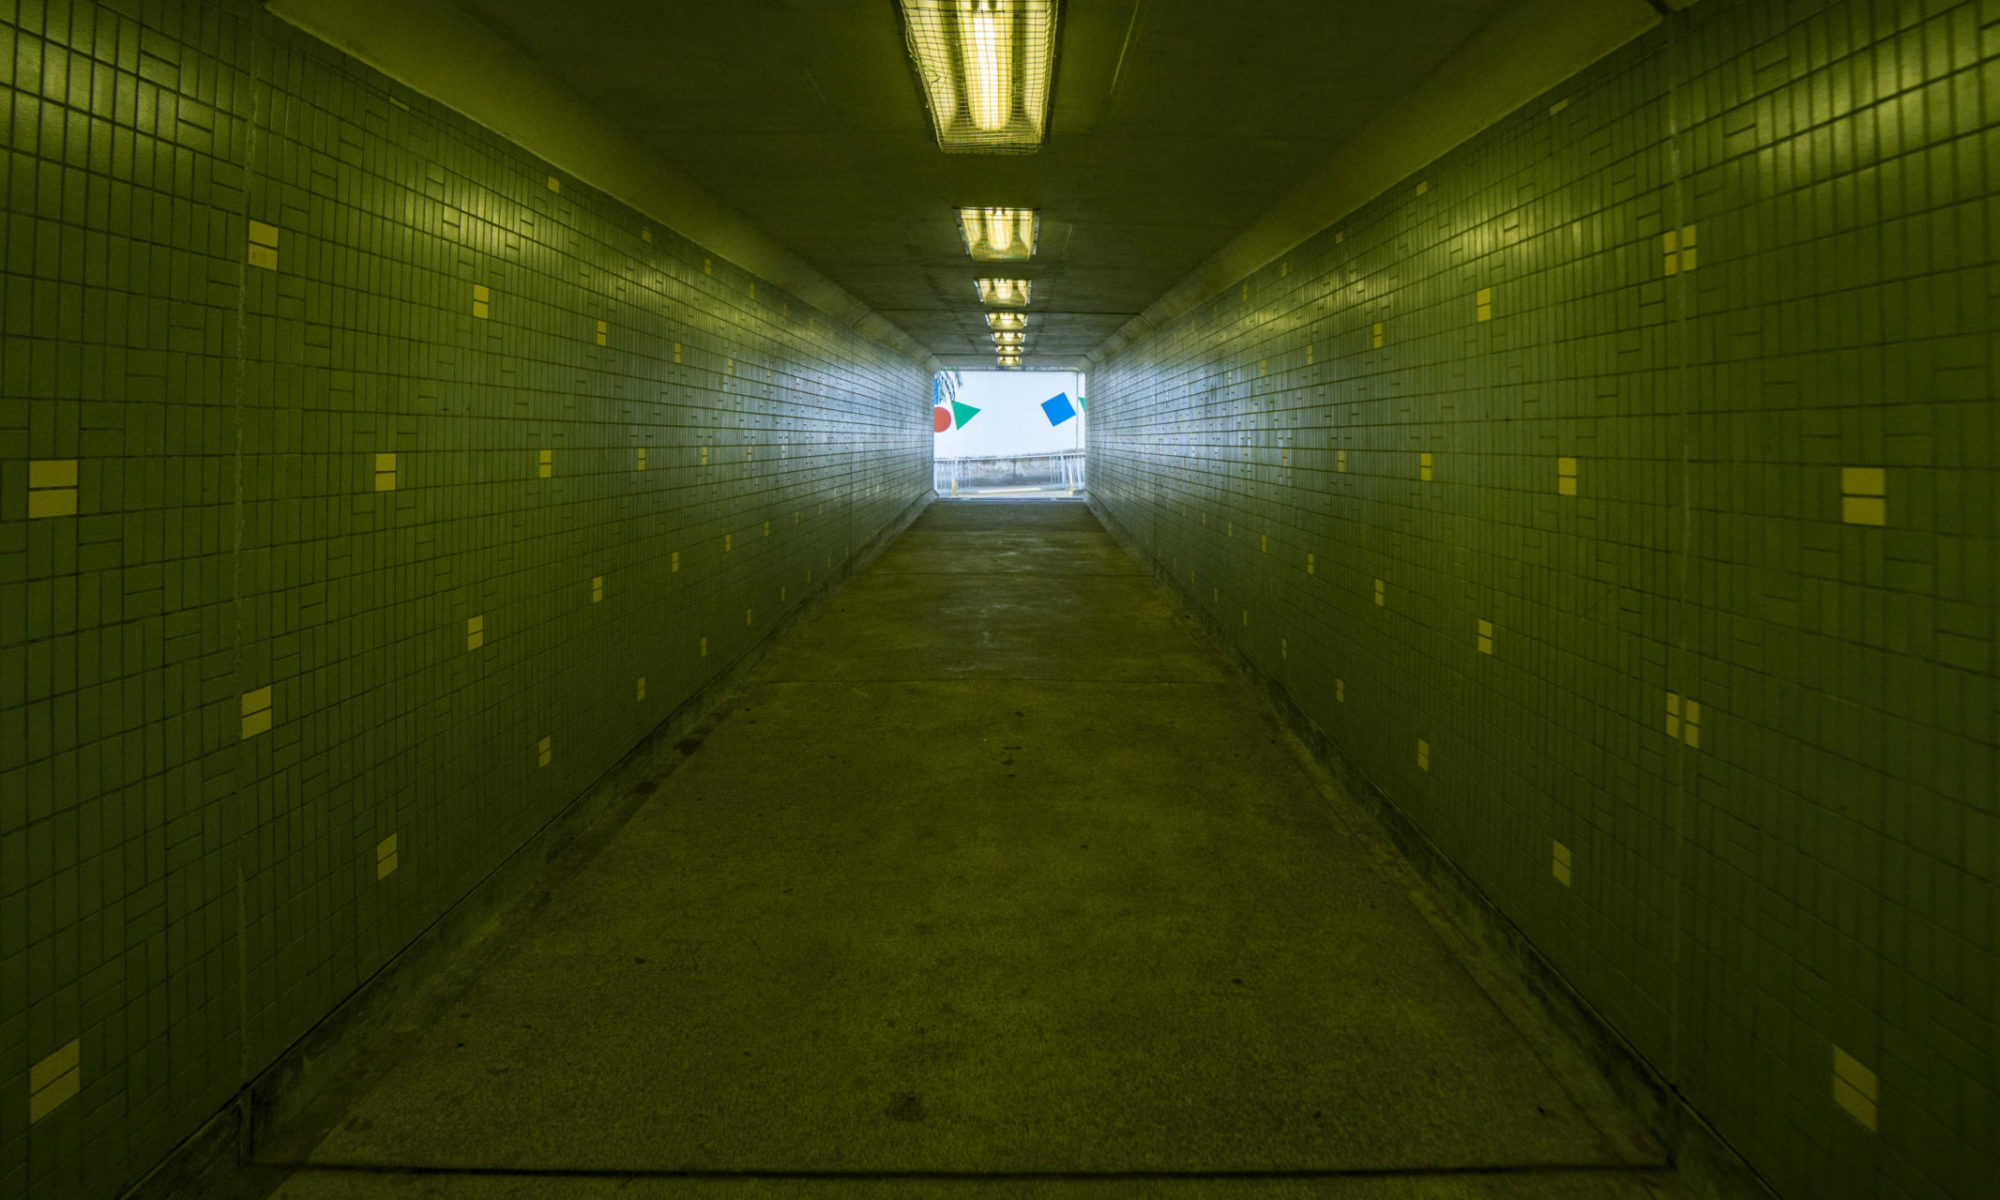 Green tiled hallway